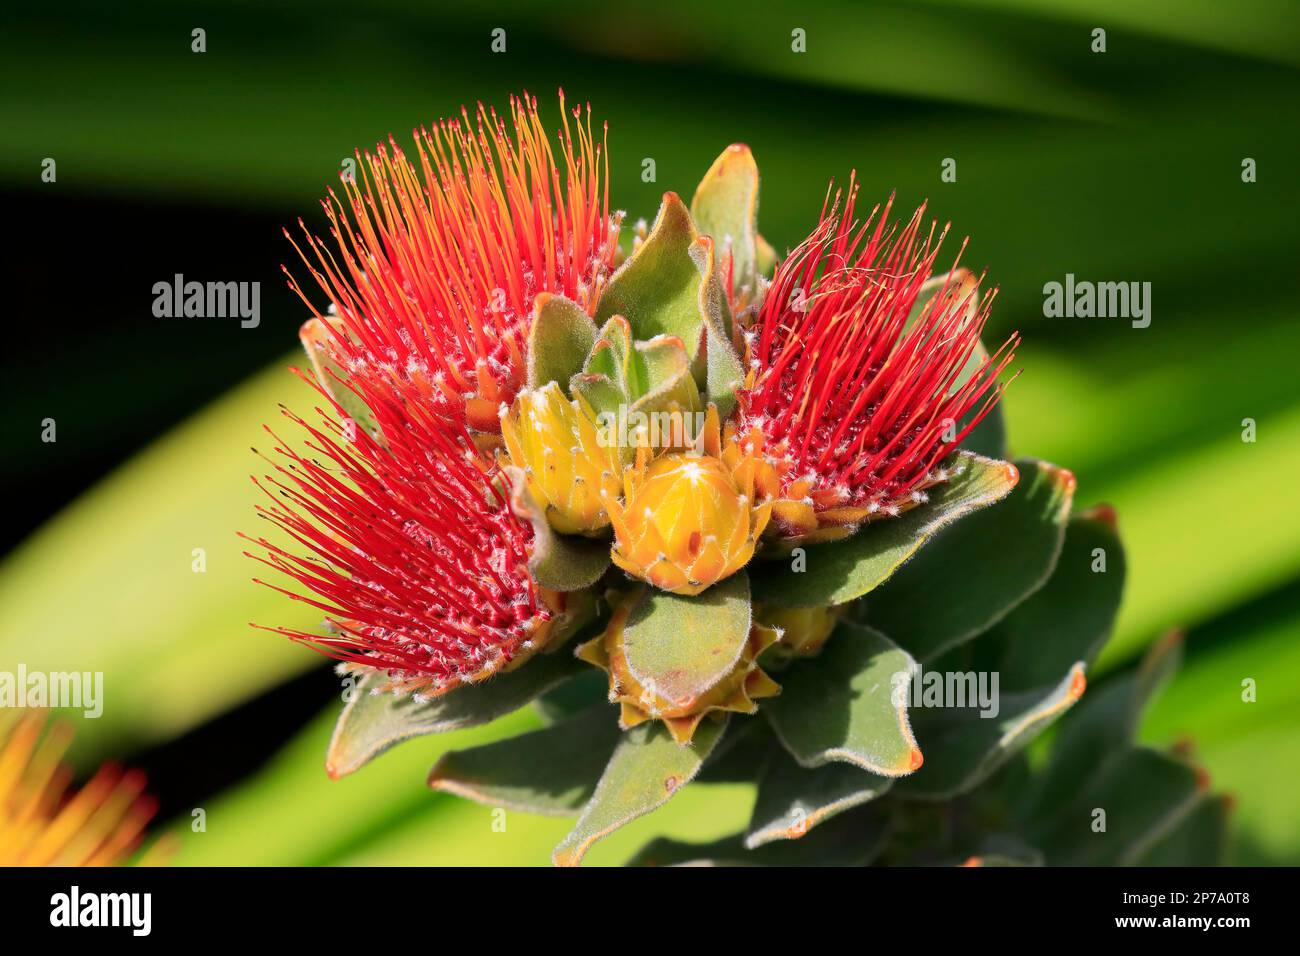 Pincushion Protea (Leucospermum species), Protea, flower, flowering, flower, bushes, plant, Kirstenbosch Botanical Gardens, Cape Town, South Africa Stock Photo